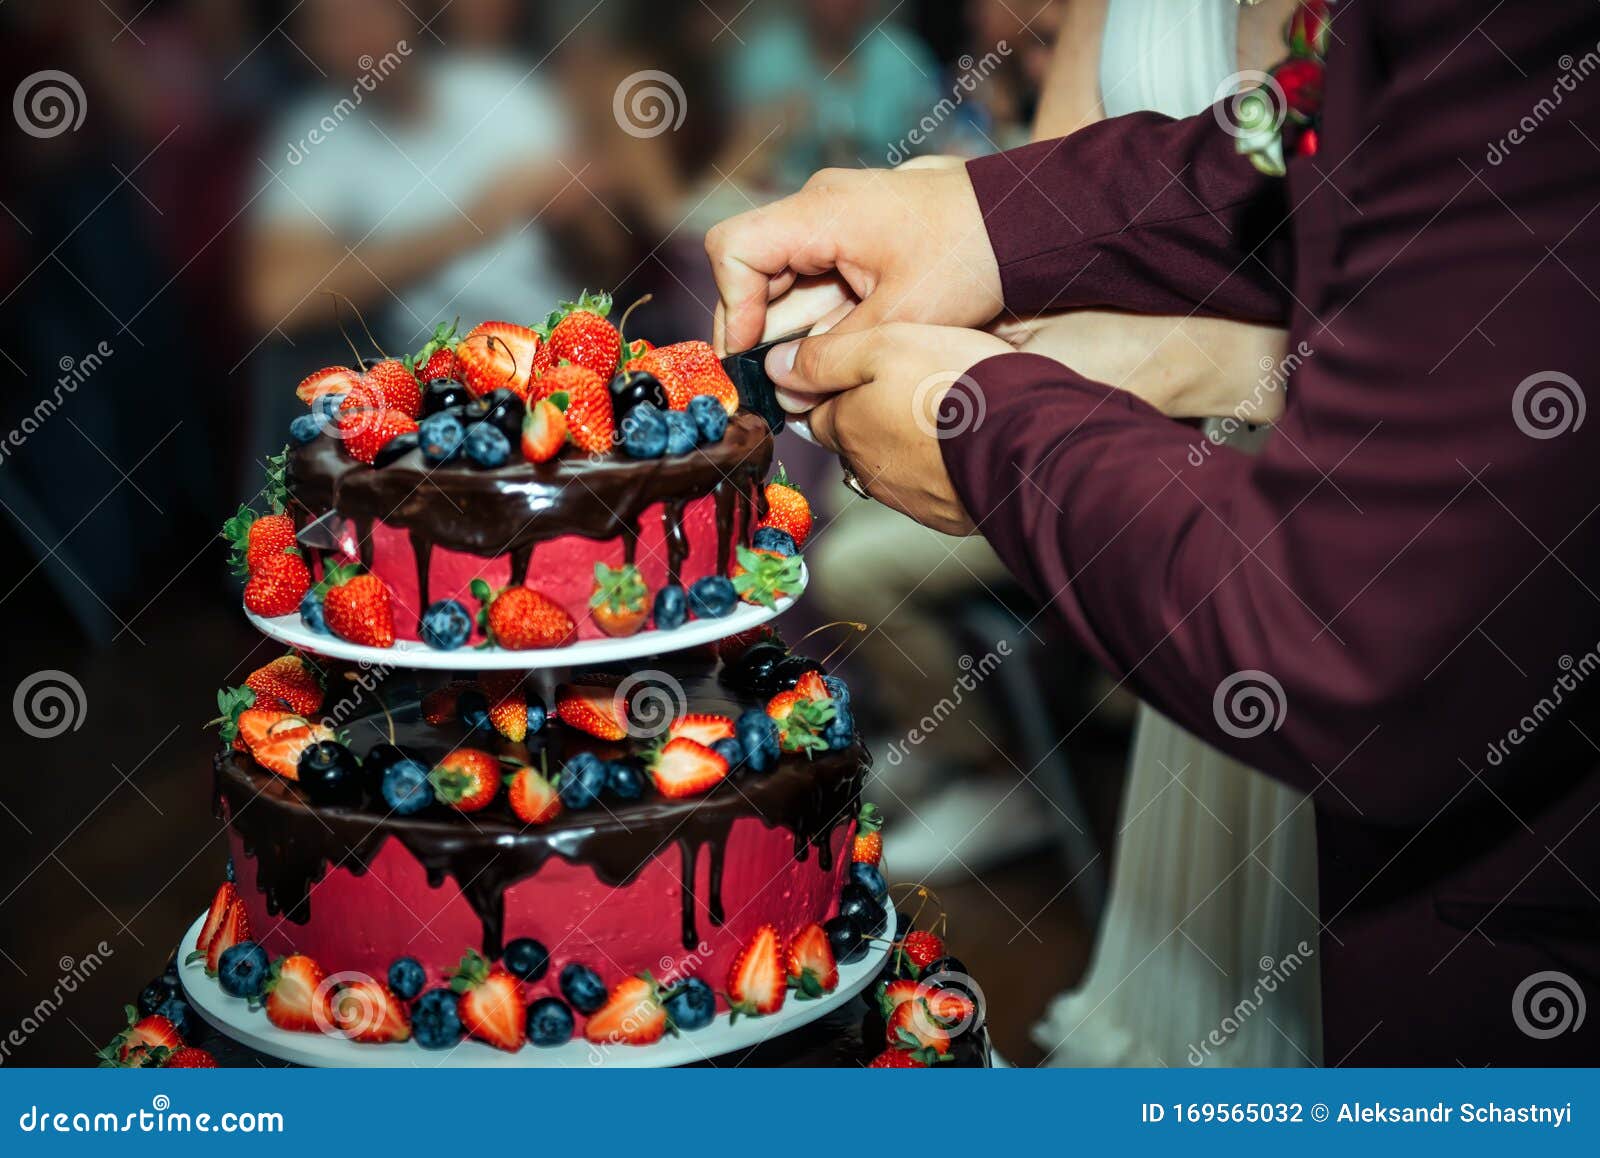 Chocolate wedding cake - Decorated Cake by BeesNees - CakesDecor